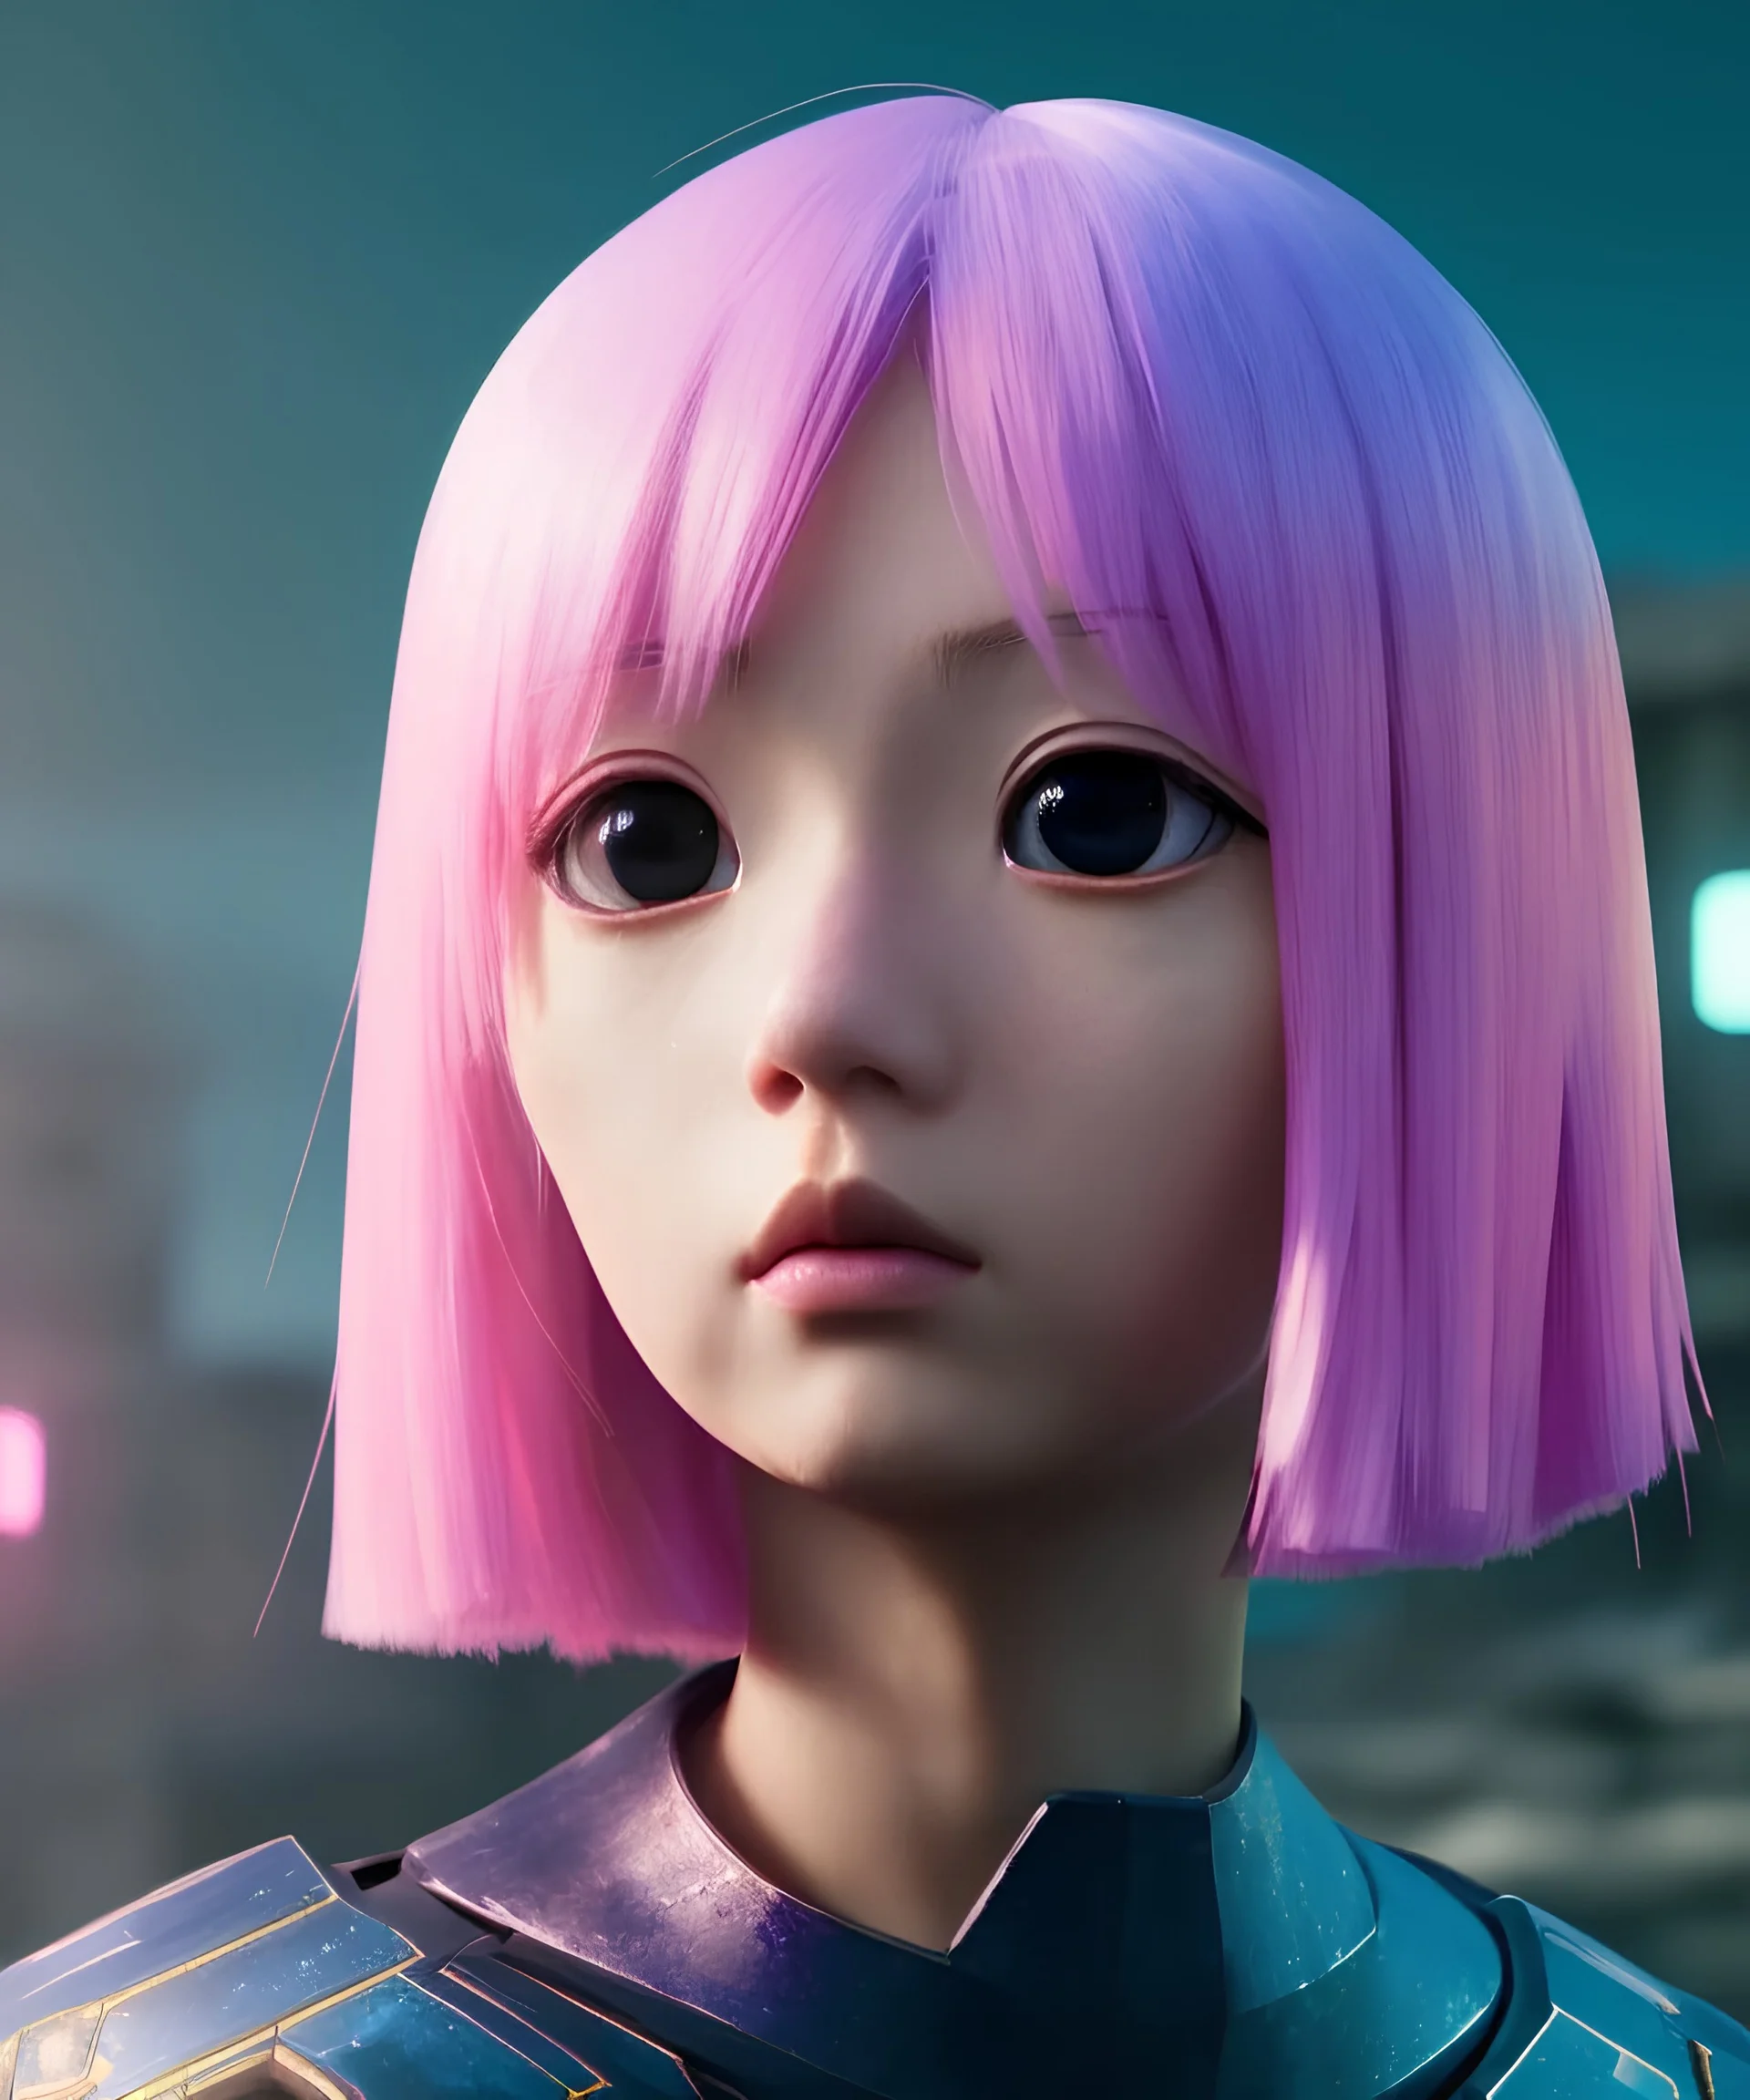 Anime girl cute neck head portrait, warrior costume, village, meditation, cyberpunk, 8k quality